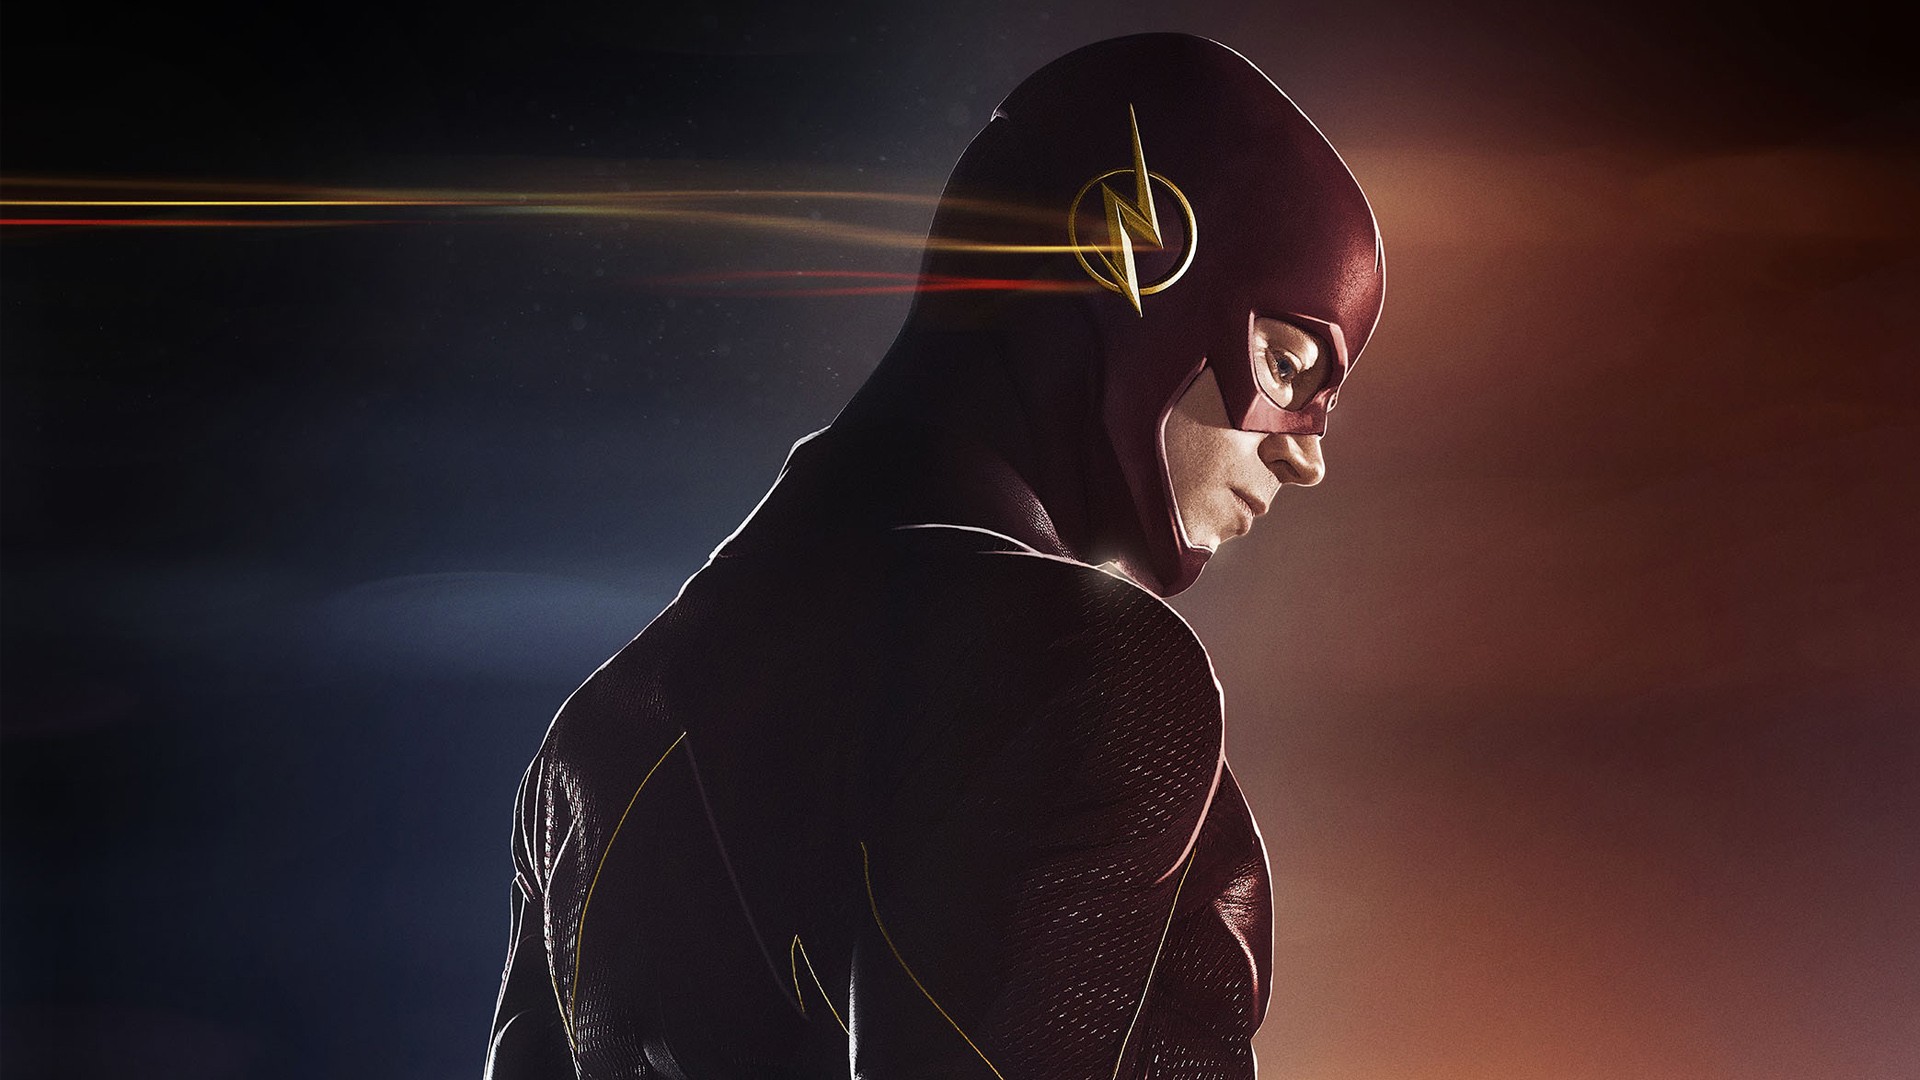 flash desktop wallpaper,fictional character,superhero,batman,flash,supervillain